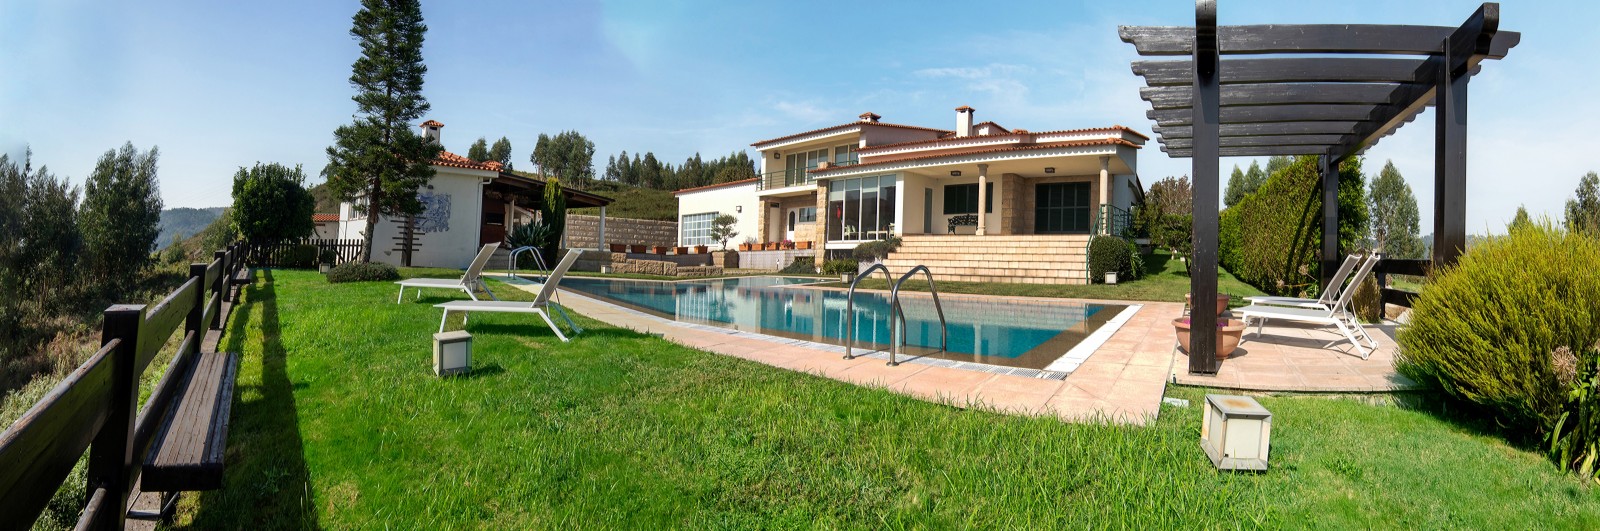 Villa de 6 chambres avec piscine, à vendre, à Lousada, Portugal_248982